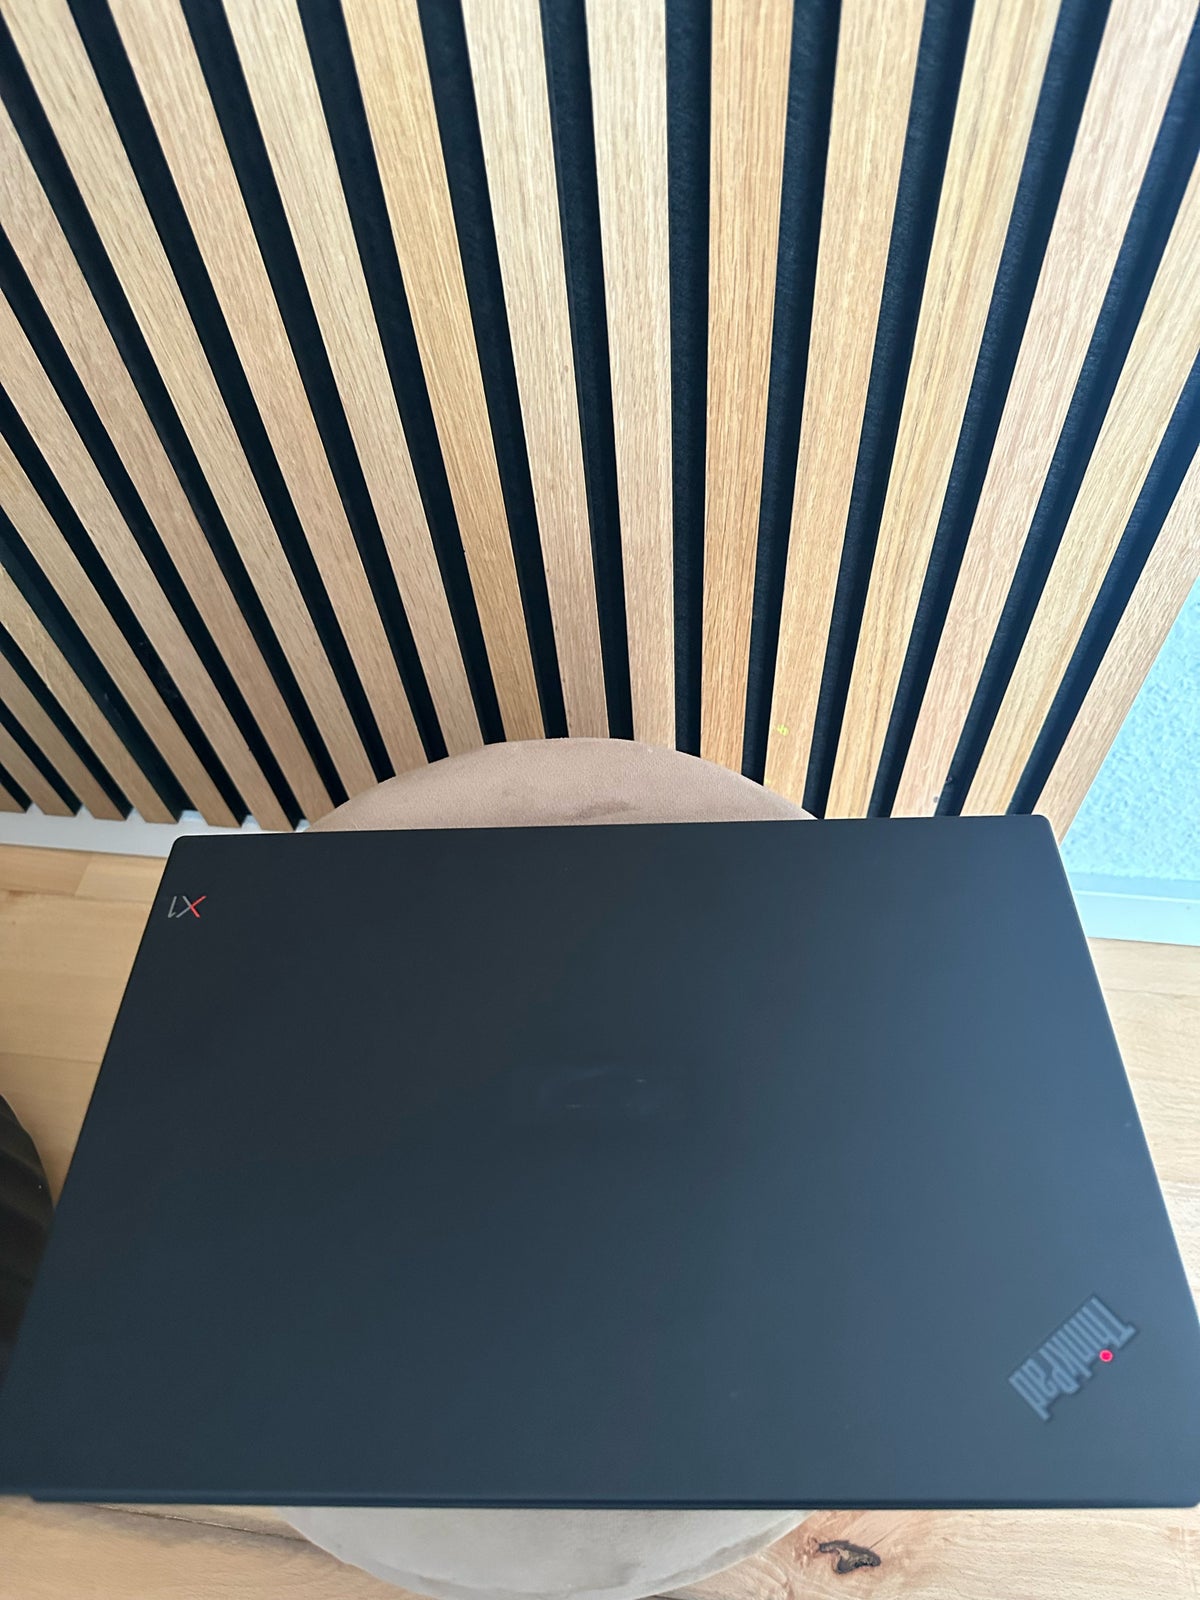 Lenovo X1 Carbon gen 6, Core i5-8259u GHz, 8 GB ram